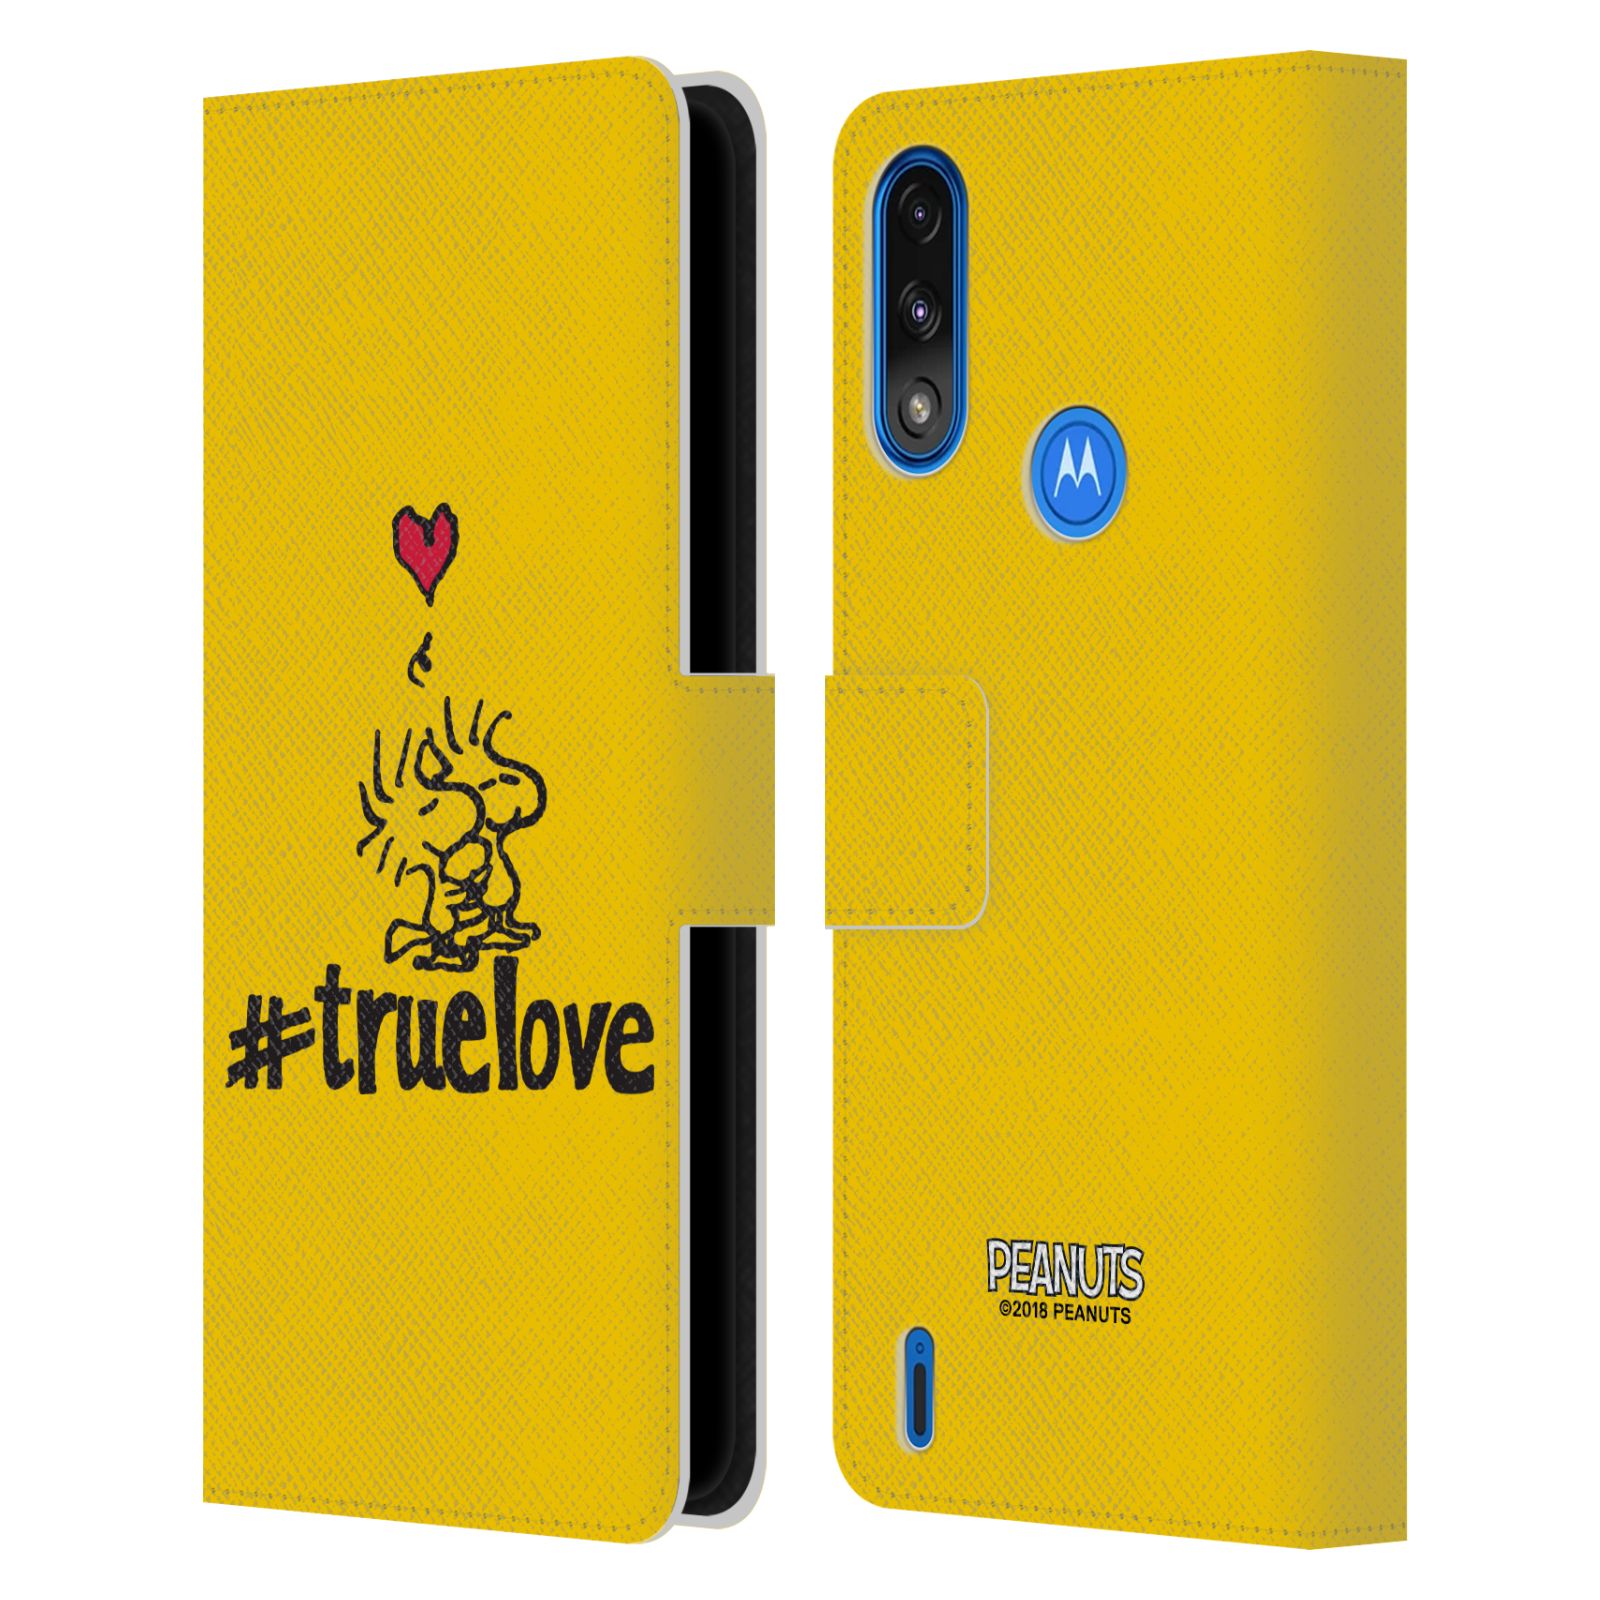 Pouzdro na mobil Motorola Moto E7 POWER - HEAD CASE - Peanuts - Woodstock pravá láska